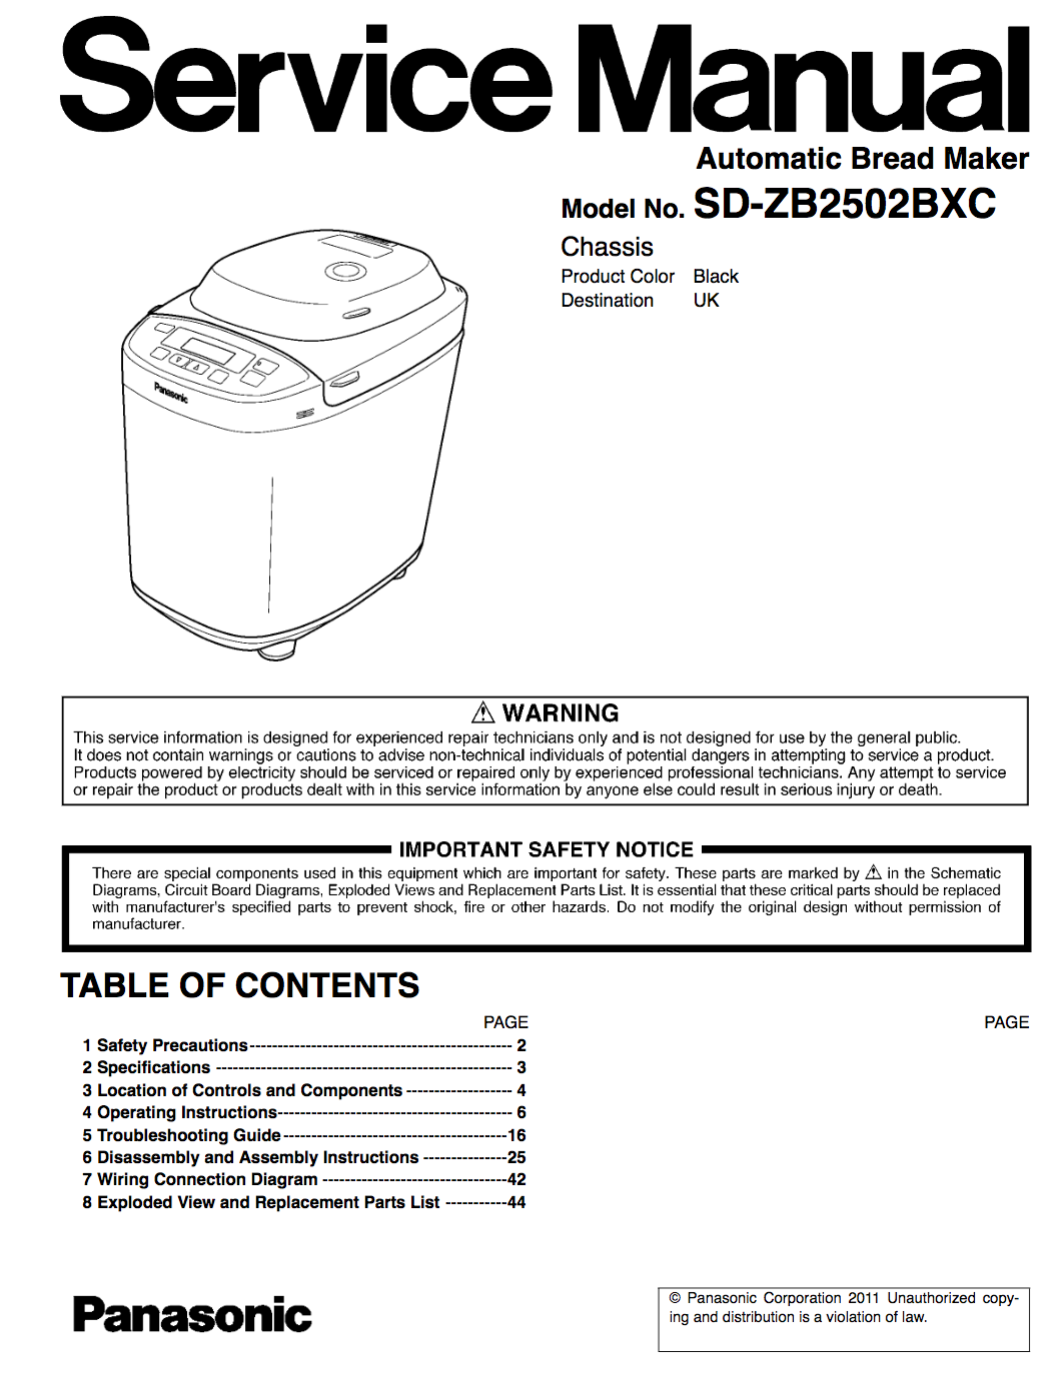 Panasonic SD-ZB2502BXC Service Manual Complete